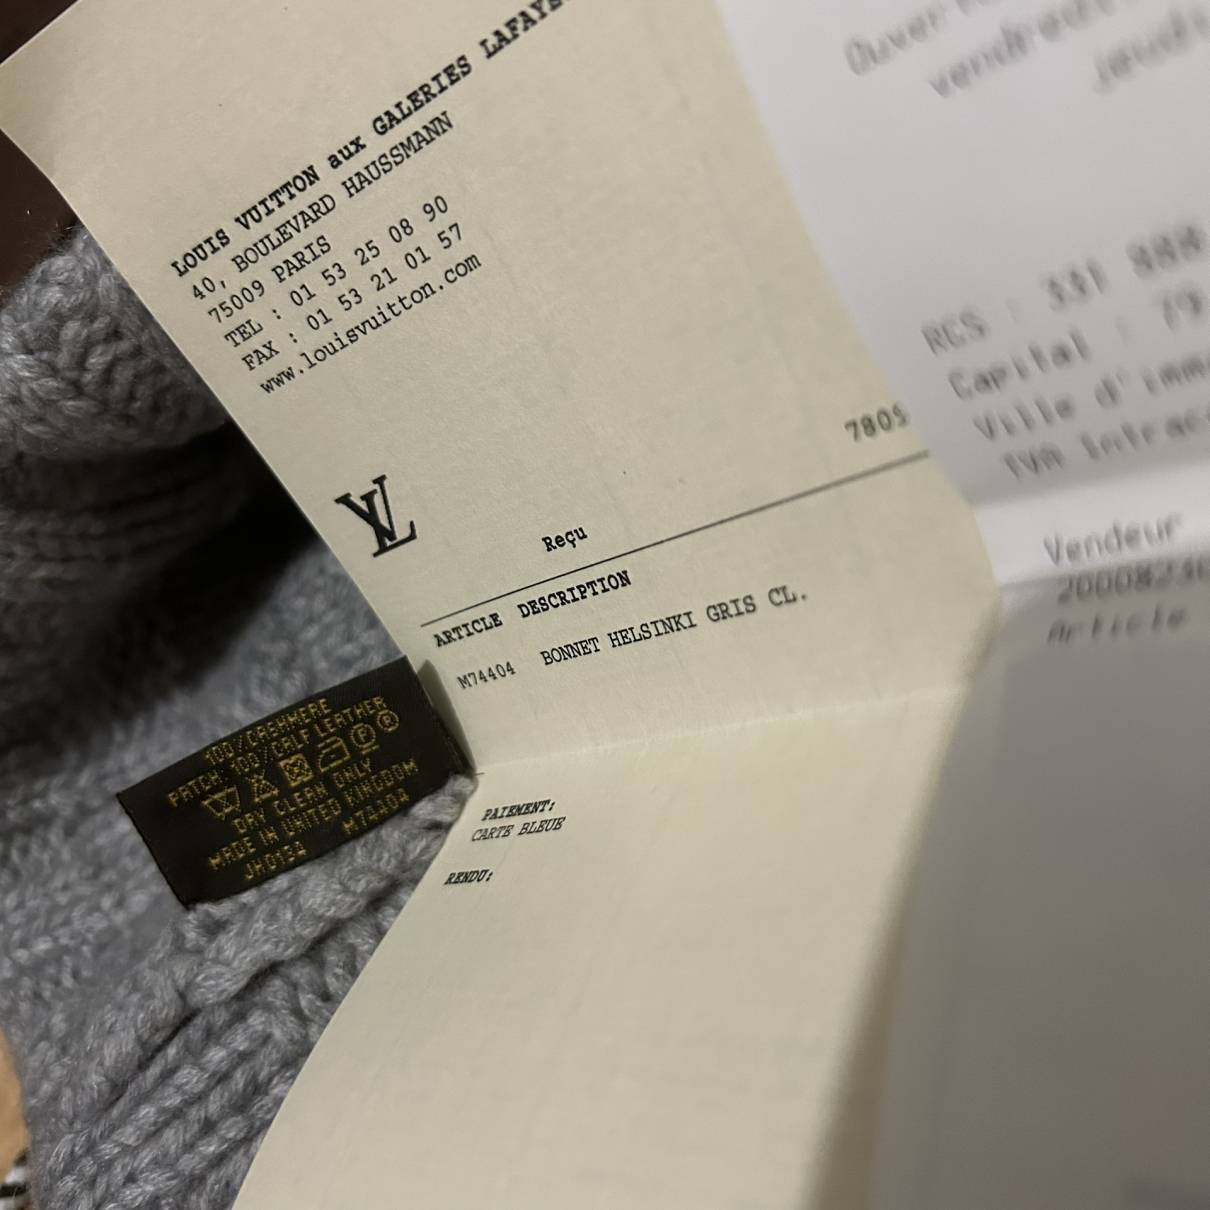 Cashmere hat Louis Vuitton Grey size 58 cm in Cashmere - 30429313